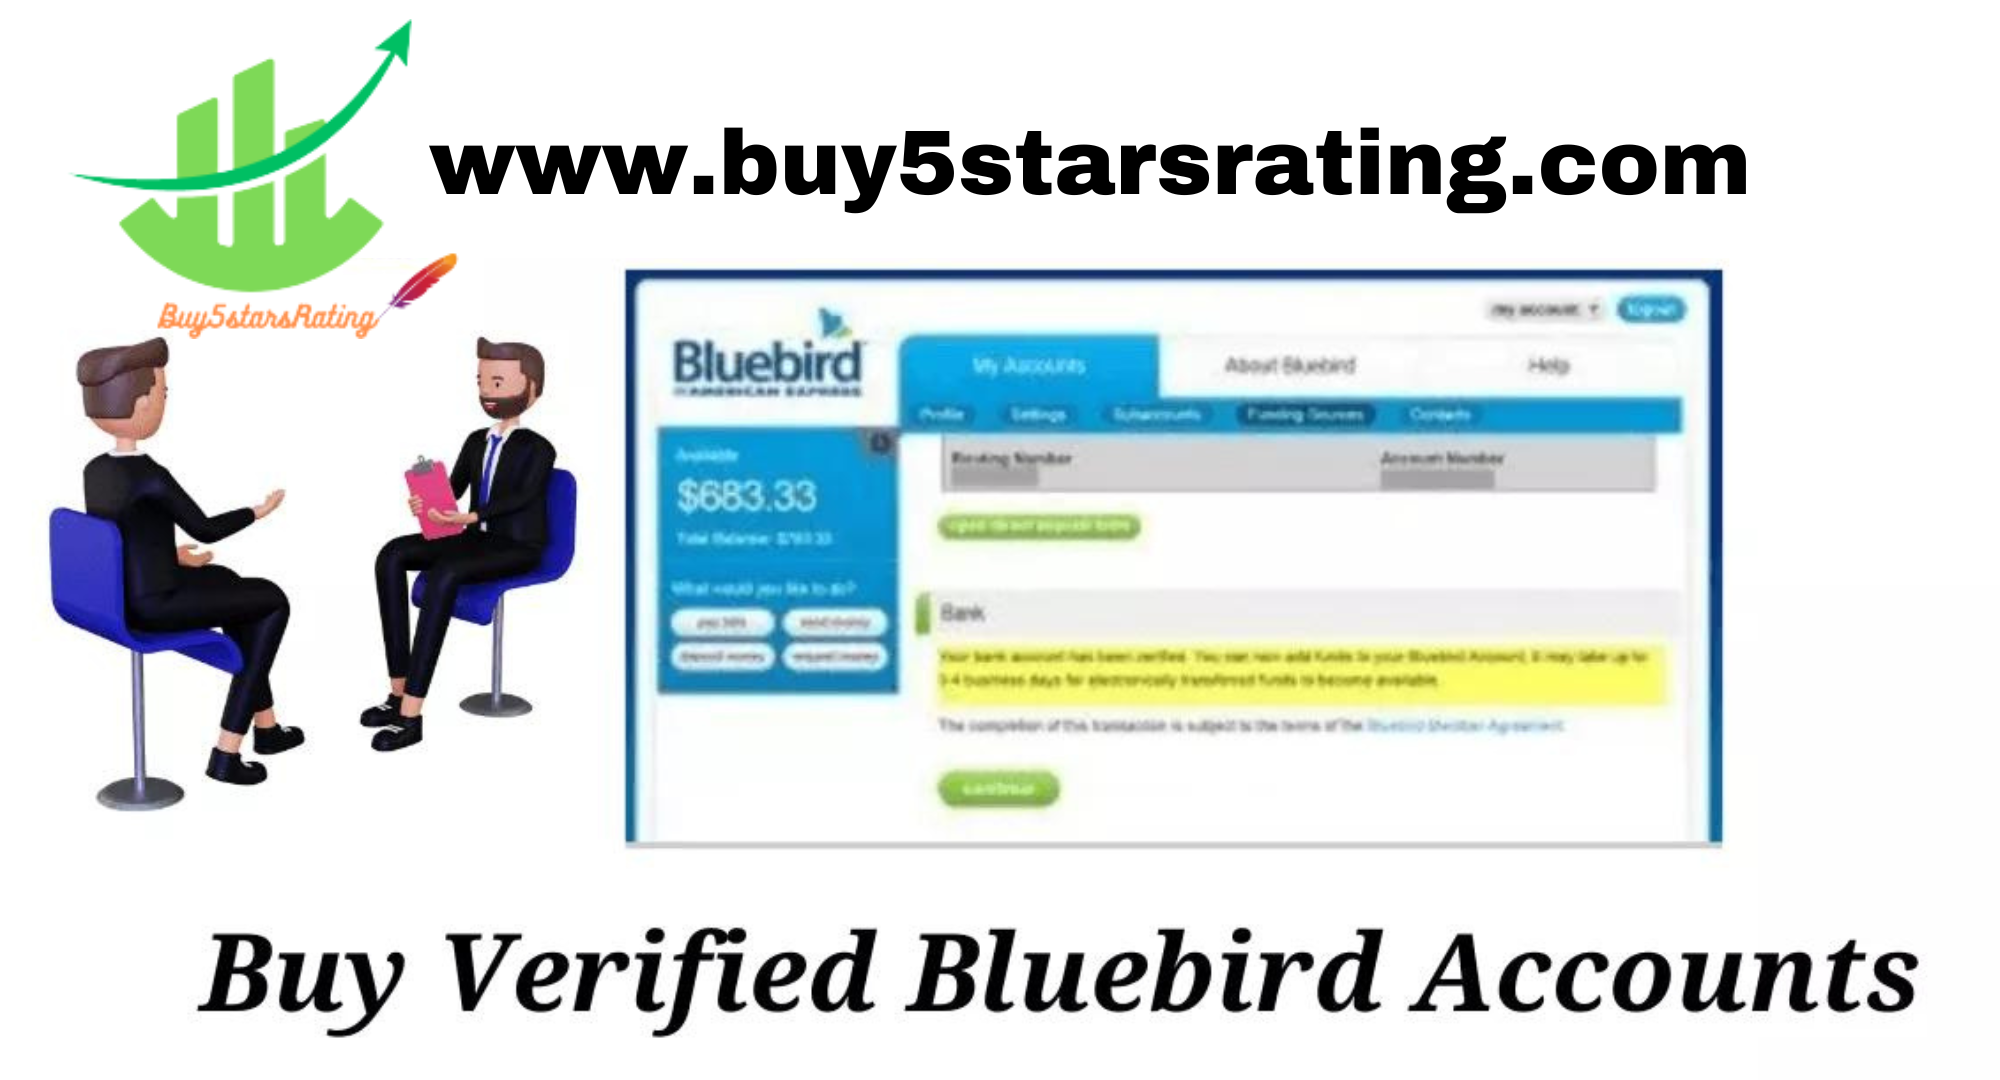 Buy Verified Bluebird Account